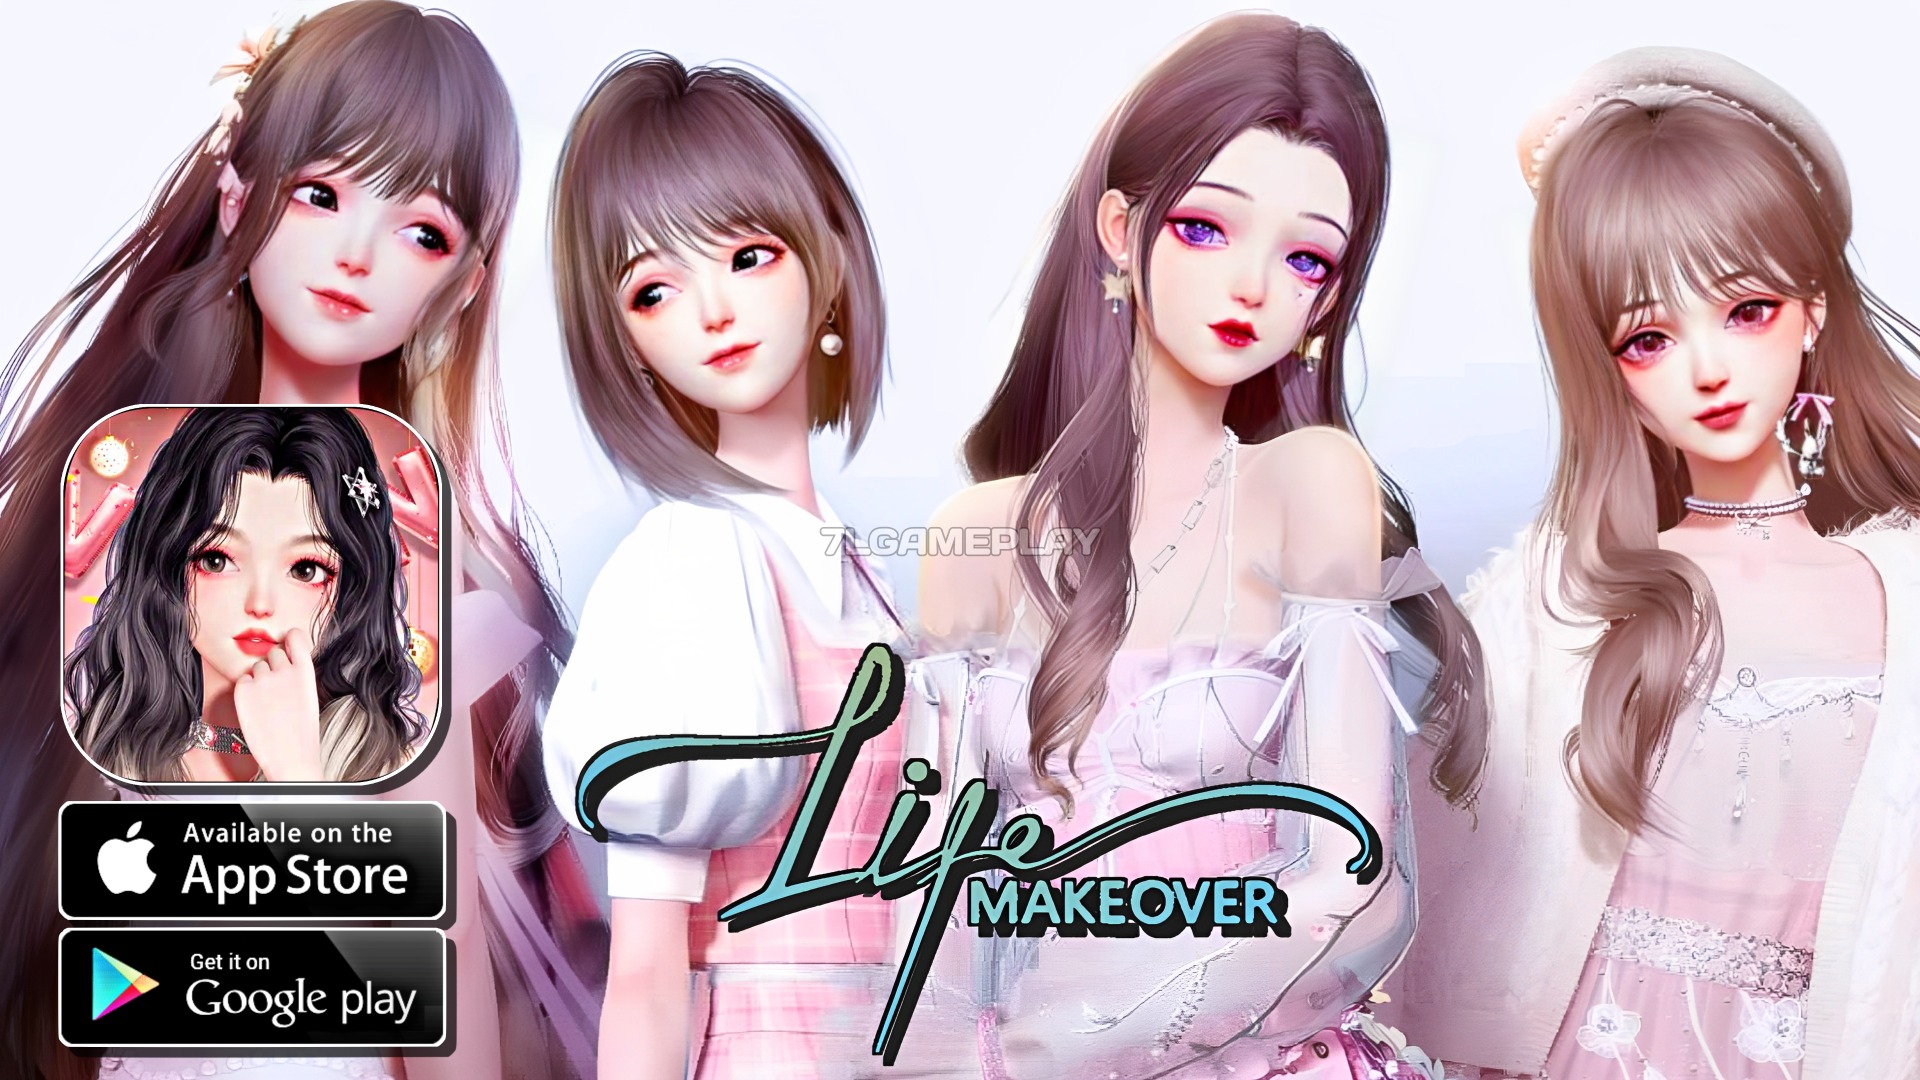 Life makeover промокоды. Life Makeover персонажи. Life Makeover игра. Life Makeover коды. Life Makeover игра геймплей.